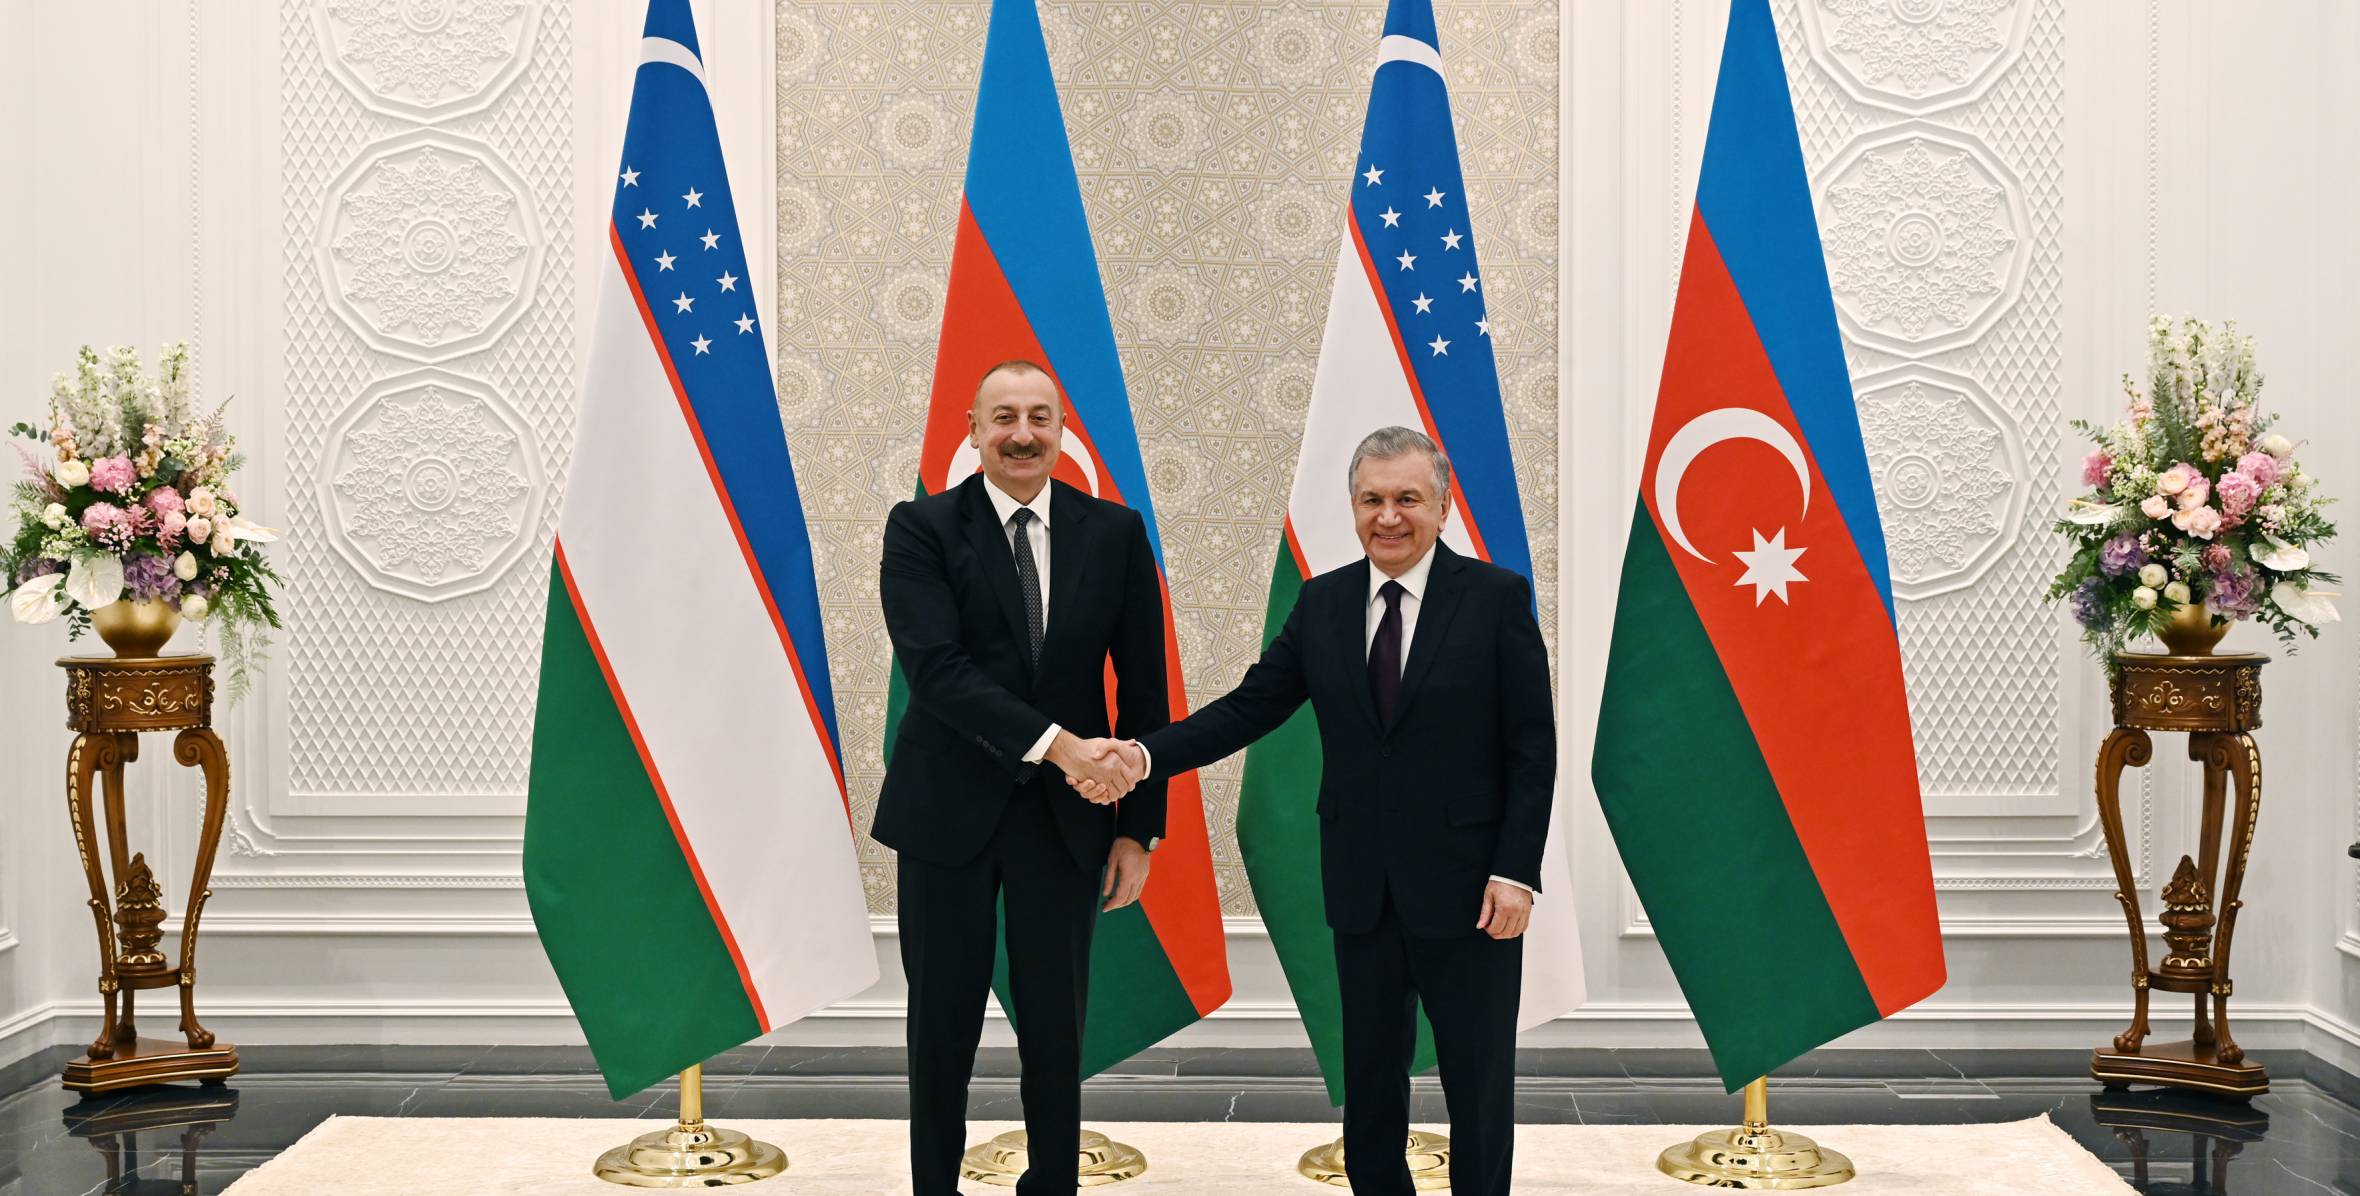 Ilham Aliyev has met with the President of the Republic of Uzbekistan Shavkat Mirziyoyev in Samarkand